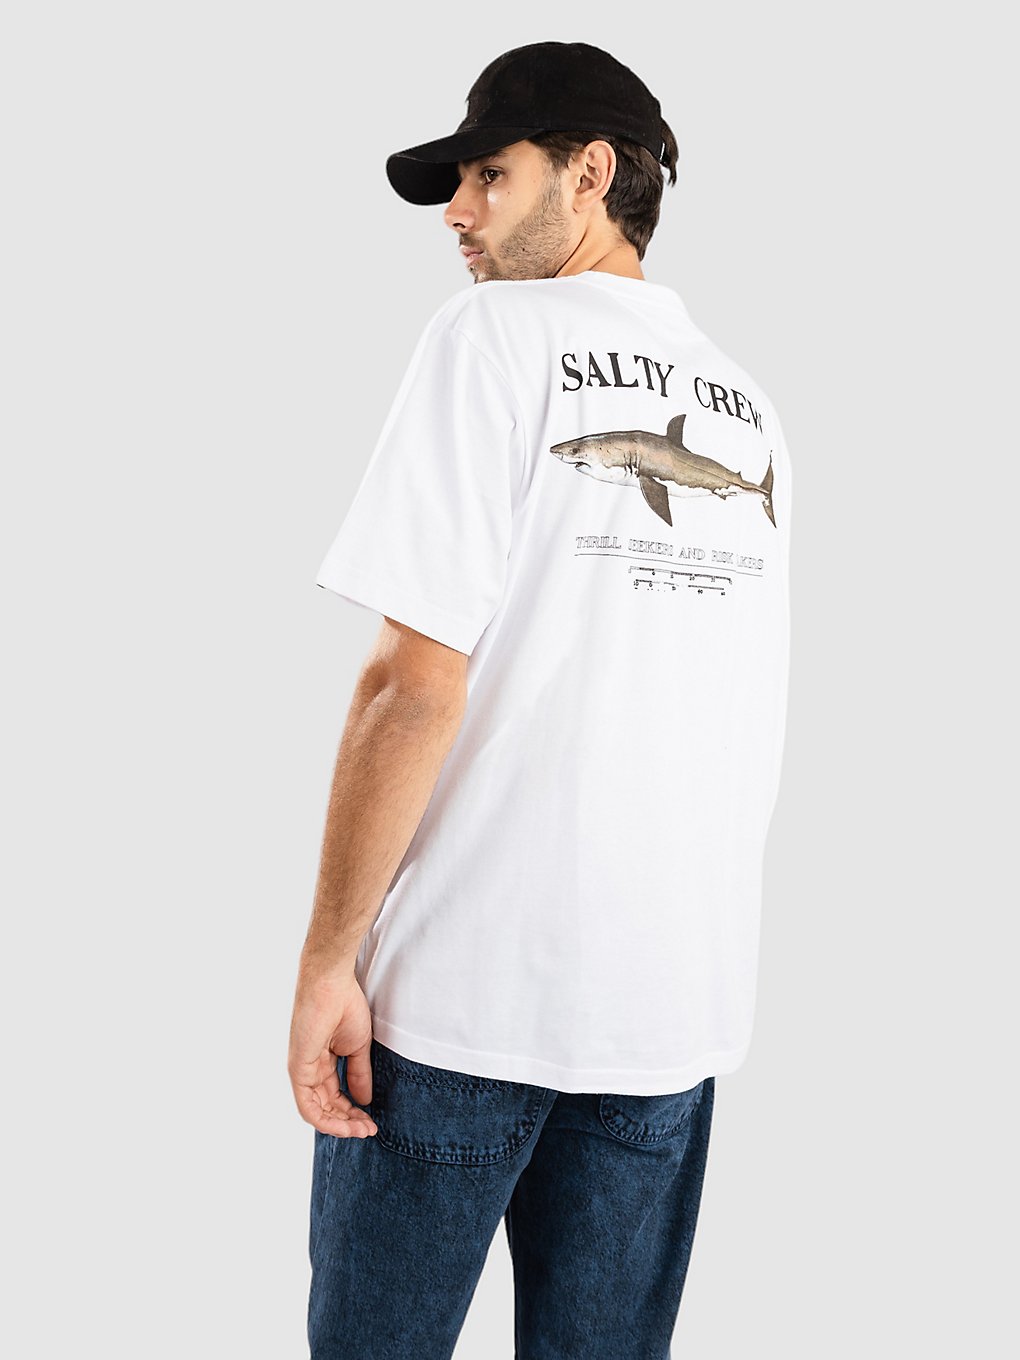 Salty Crew Bruce Premium T-Shirt white kaufen